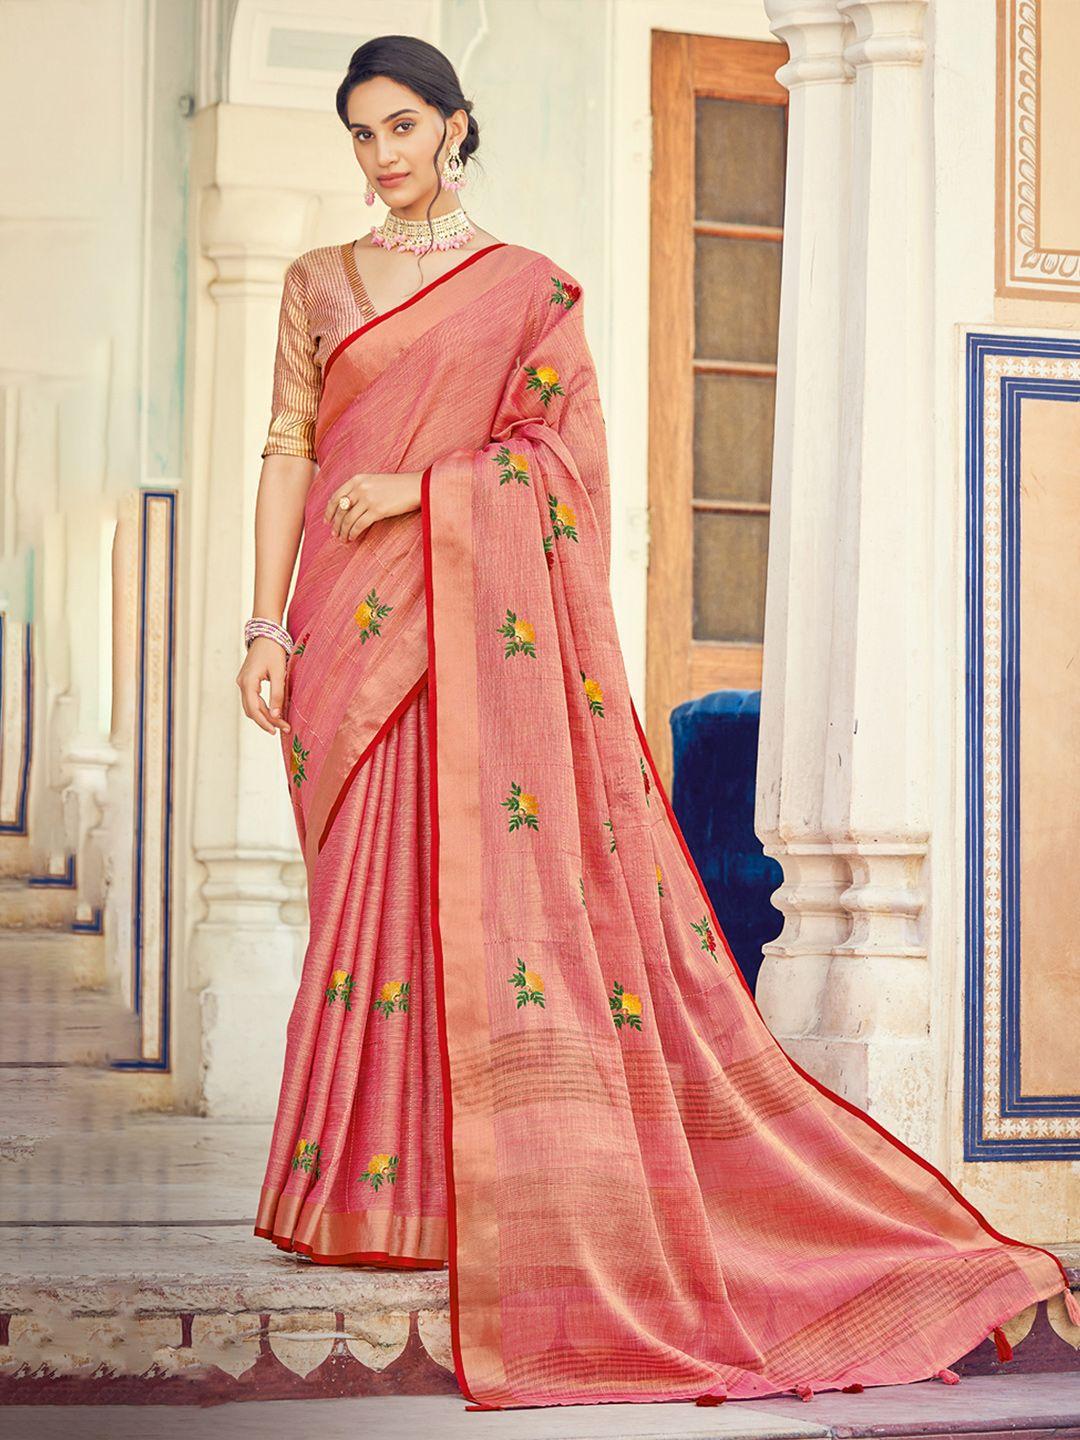 devatithi-floral-embroidered-zari-saree